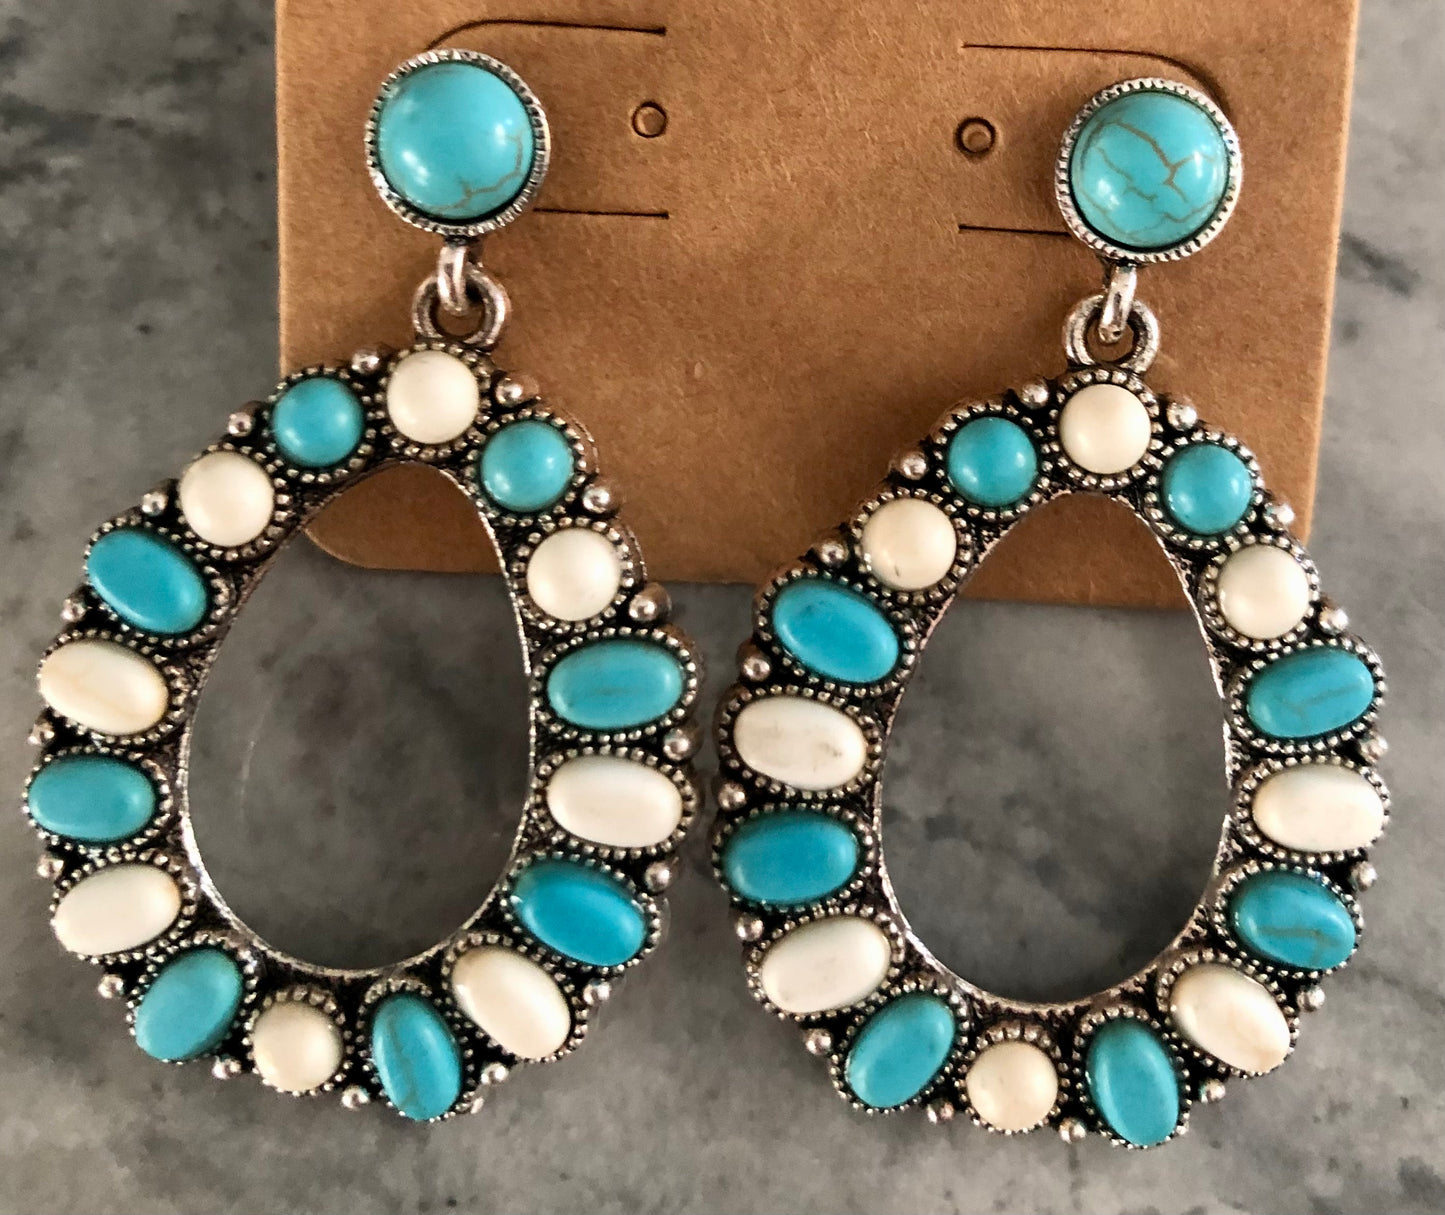 Turquoise and bone earrings